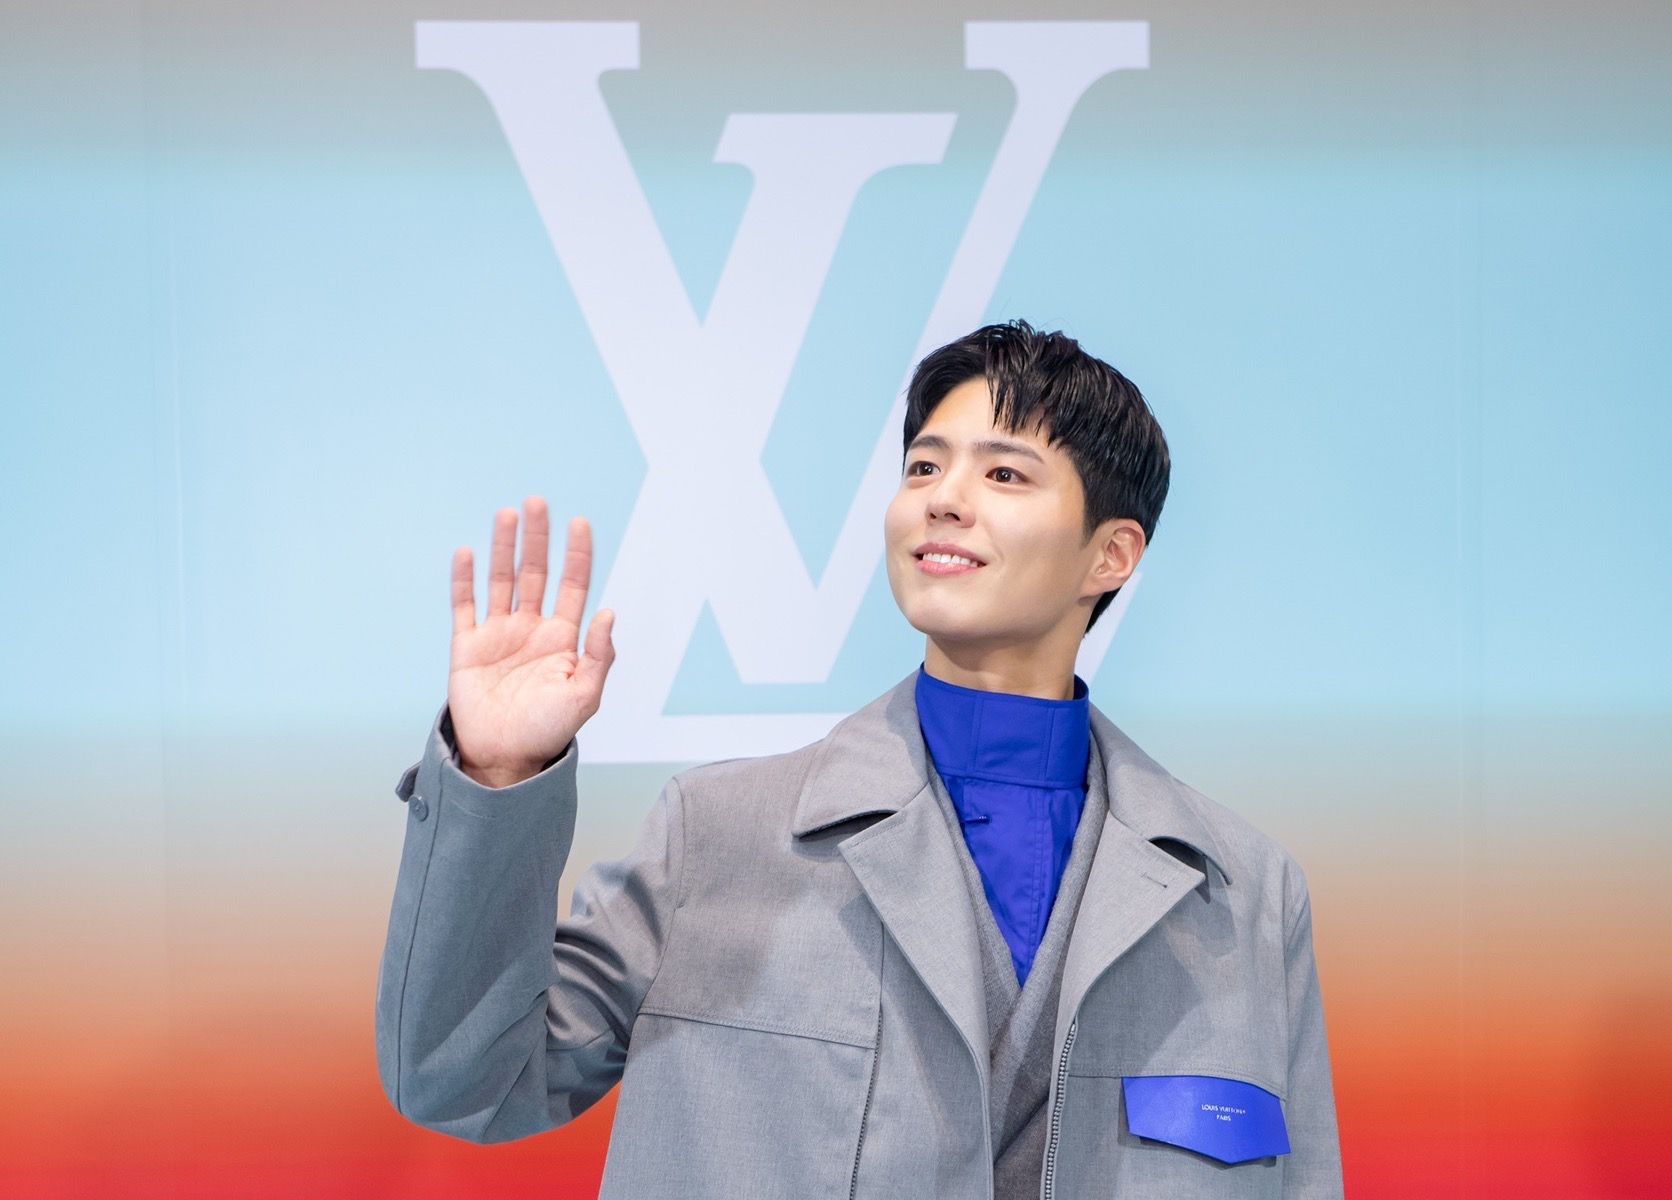 Louis Vuitton to host its first men's prefall show in Hong Kong